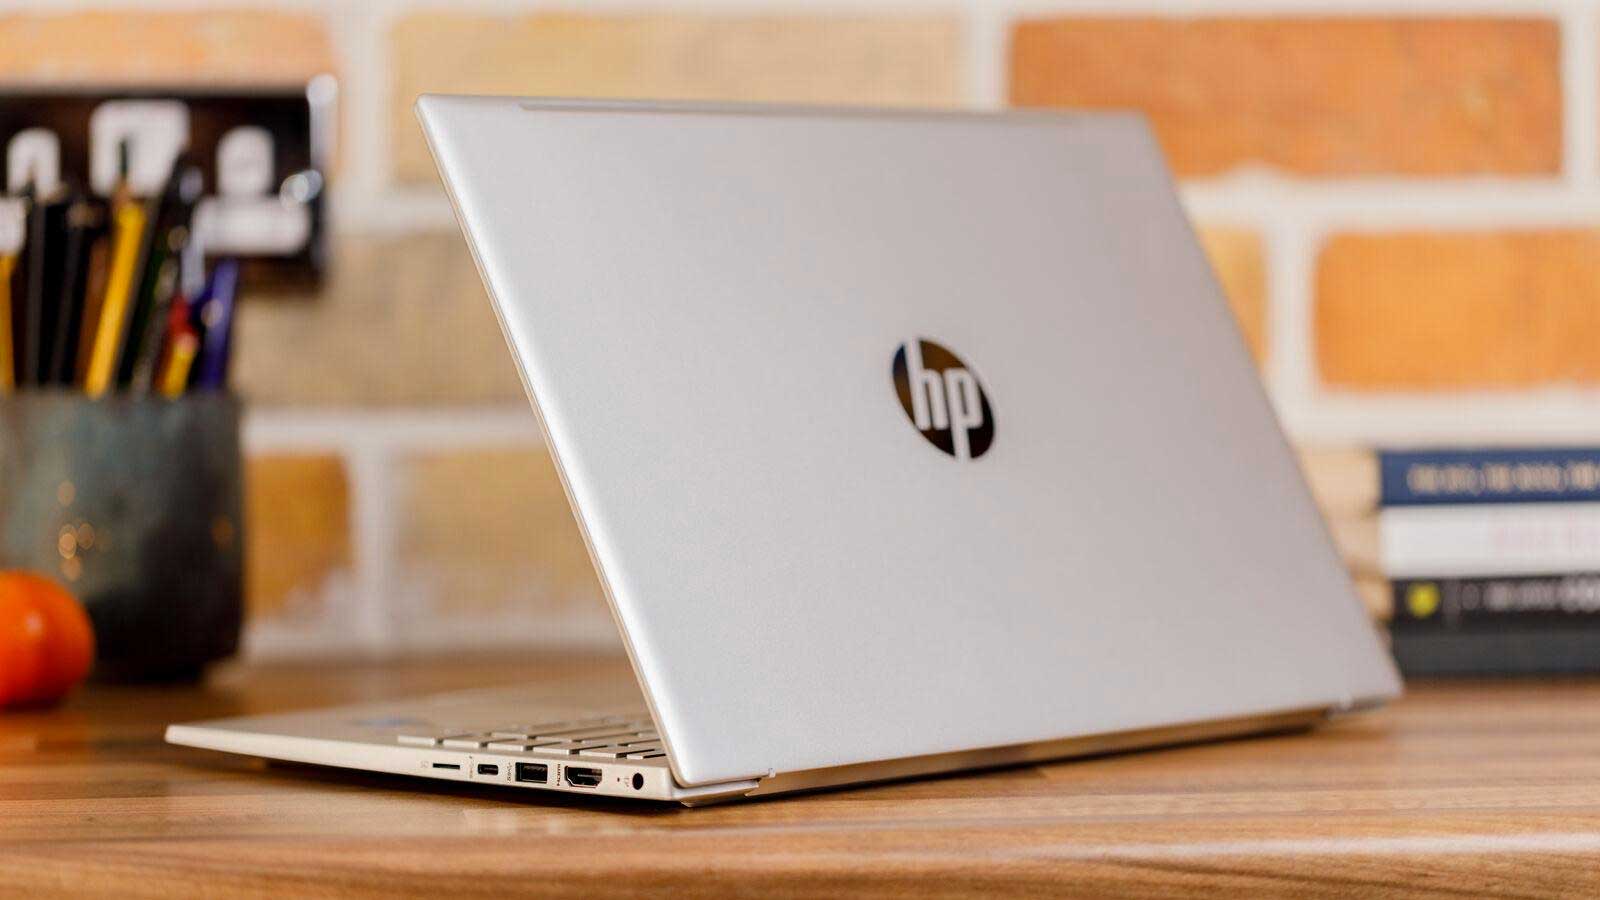 HP Pavilion 15 laptop for podcasting